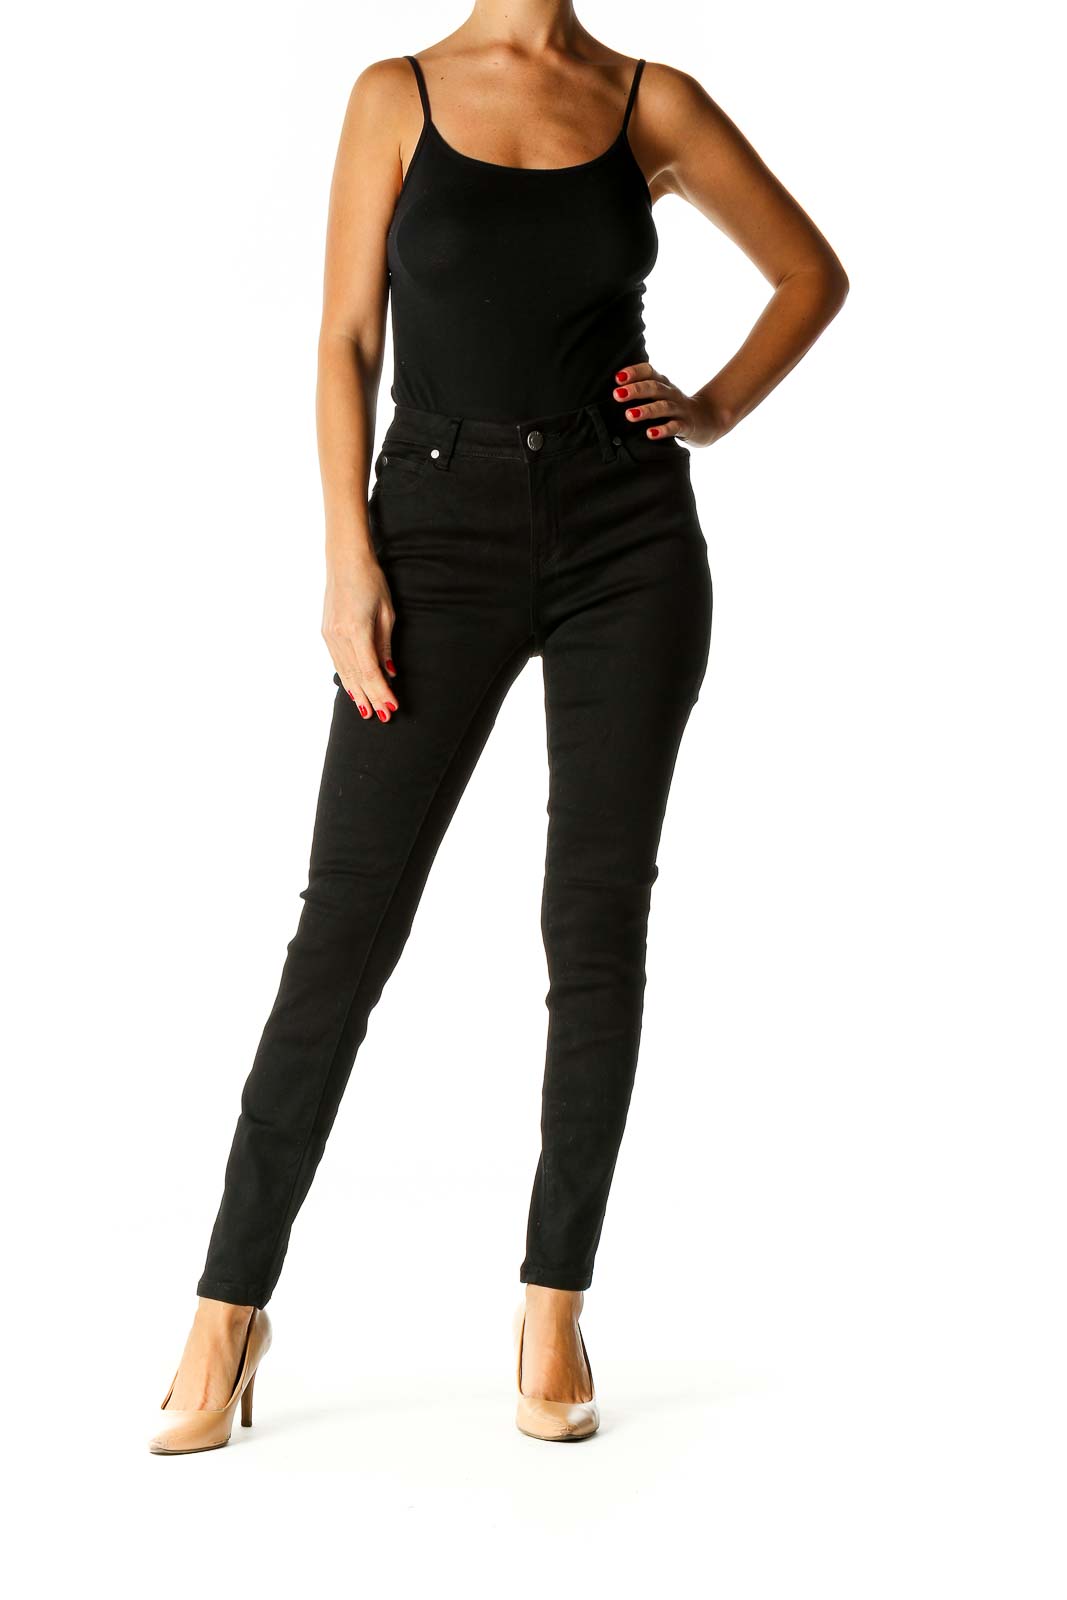 Simply Vera Vera Wang Bootcut Black Pull On Dress Pants Size XS